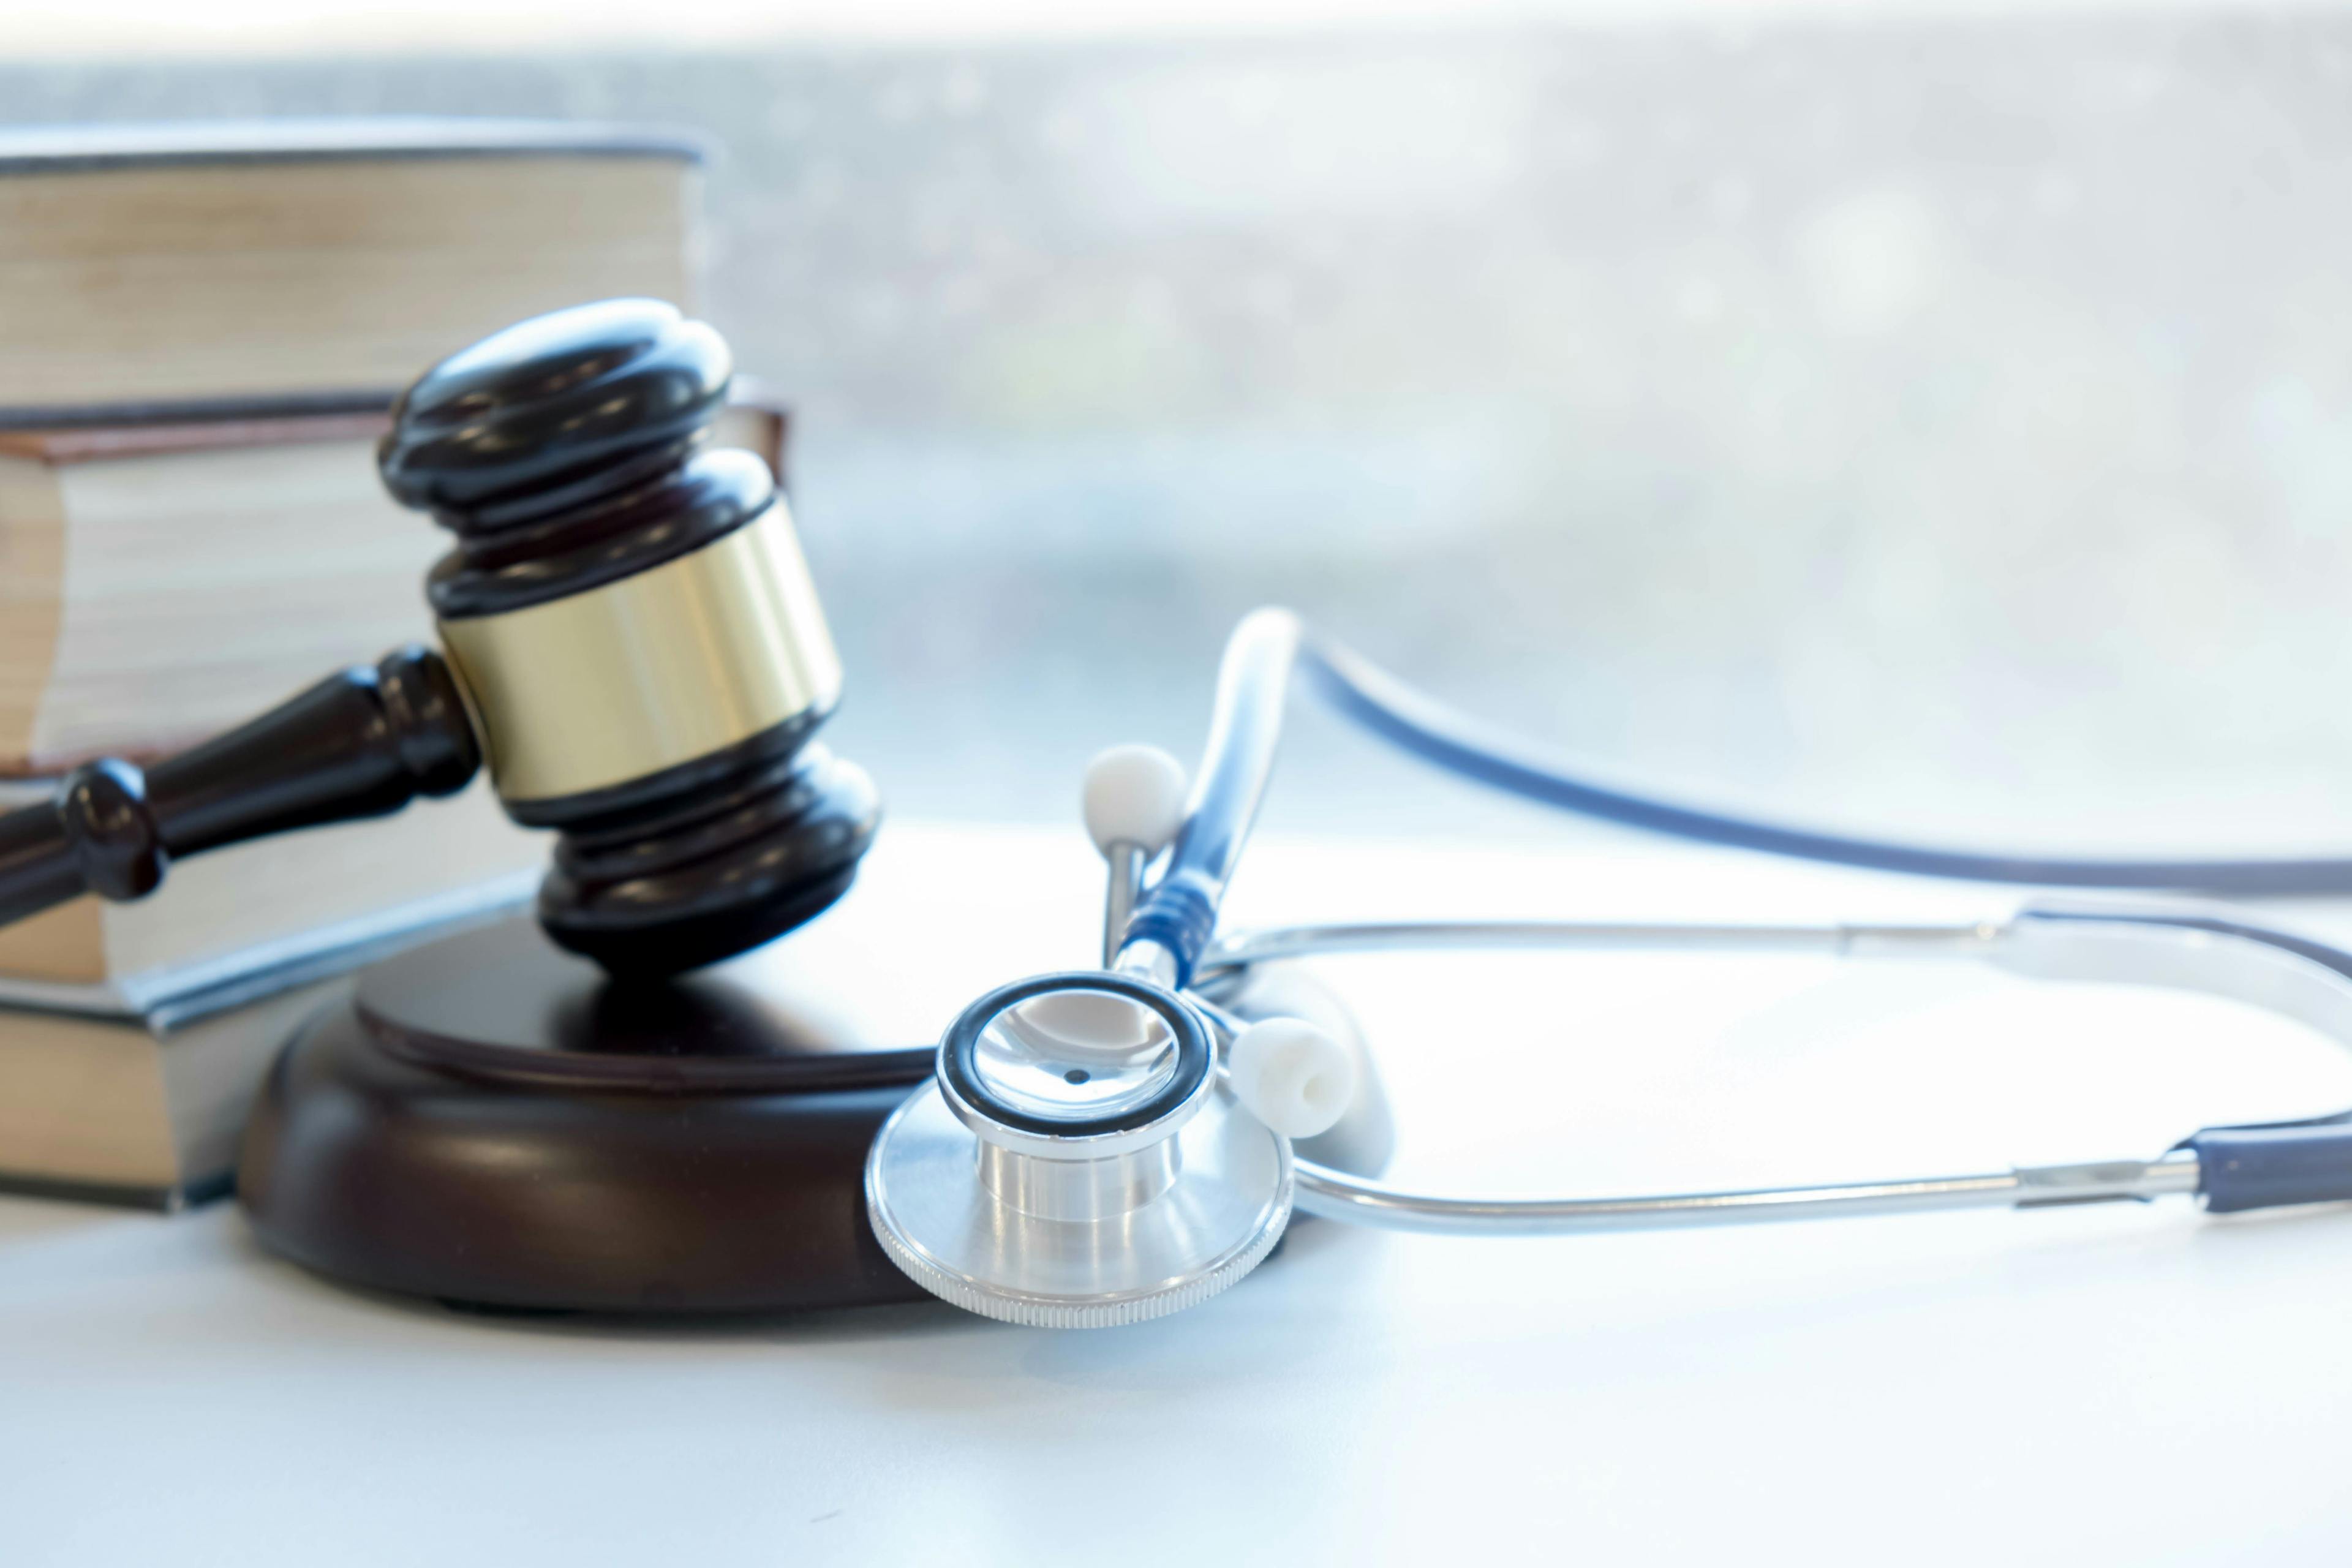 A moral crisis: Choosing between medicine and law 